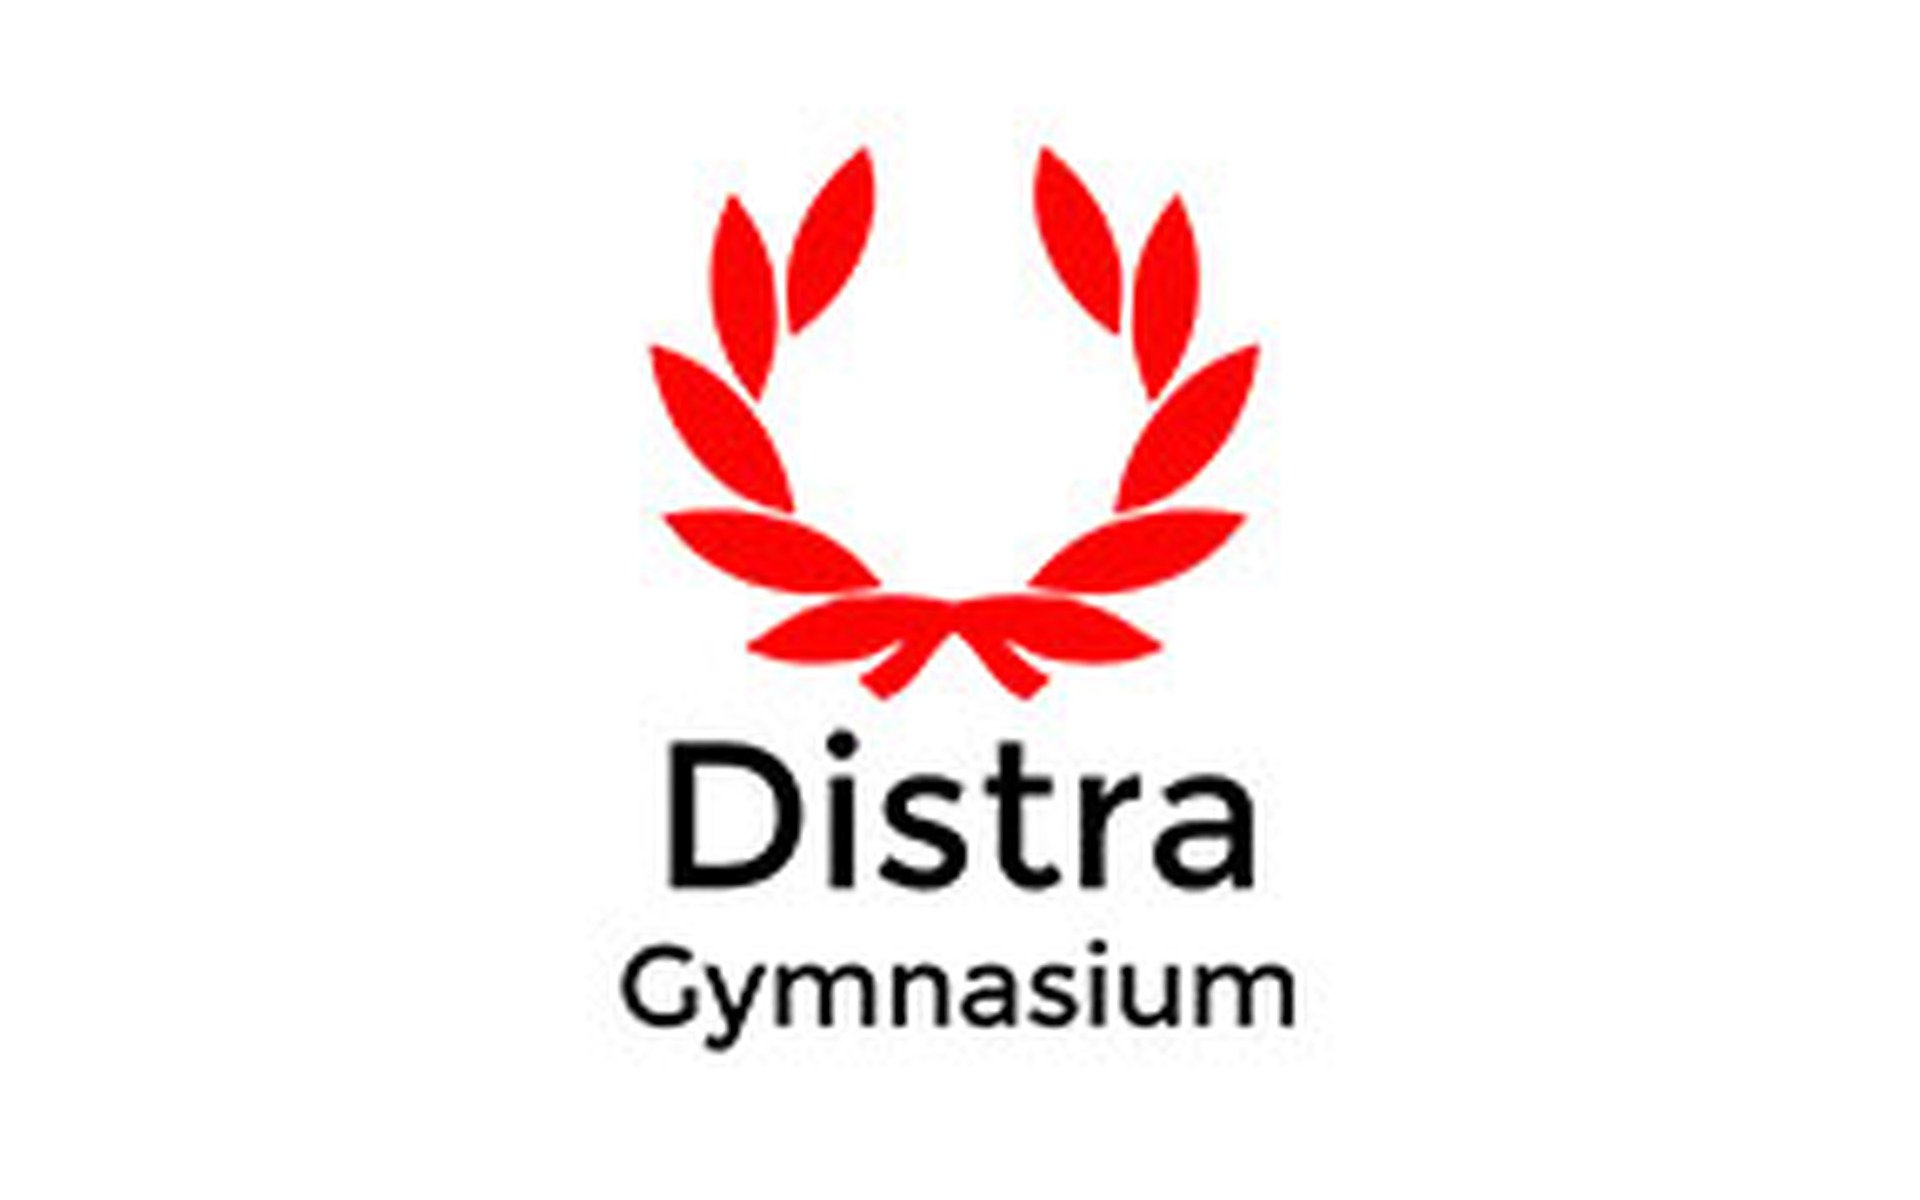 Distra Gymnasium